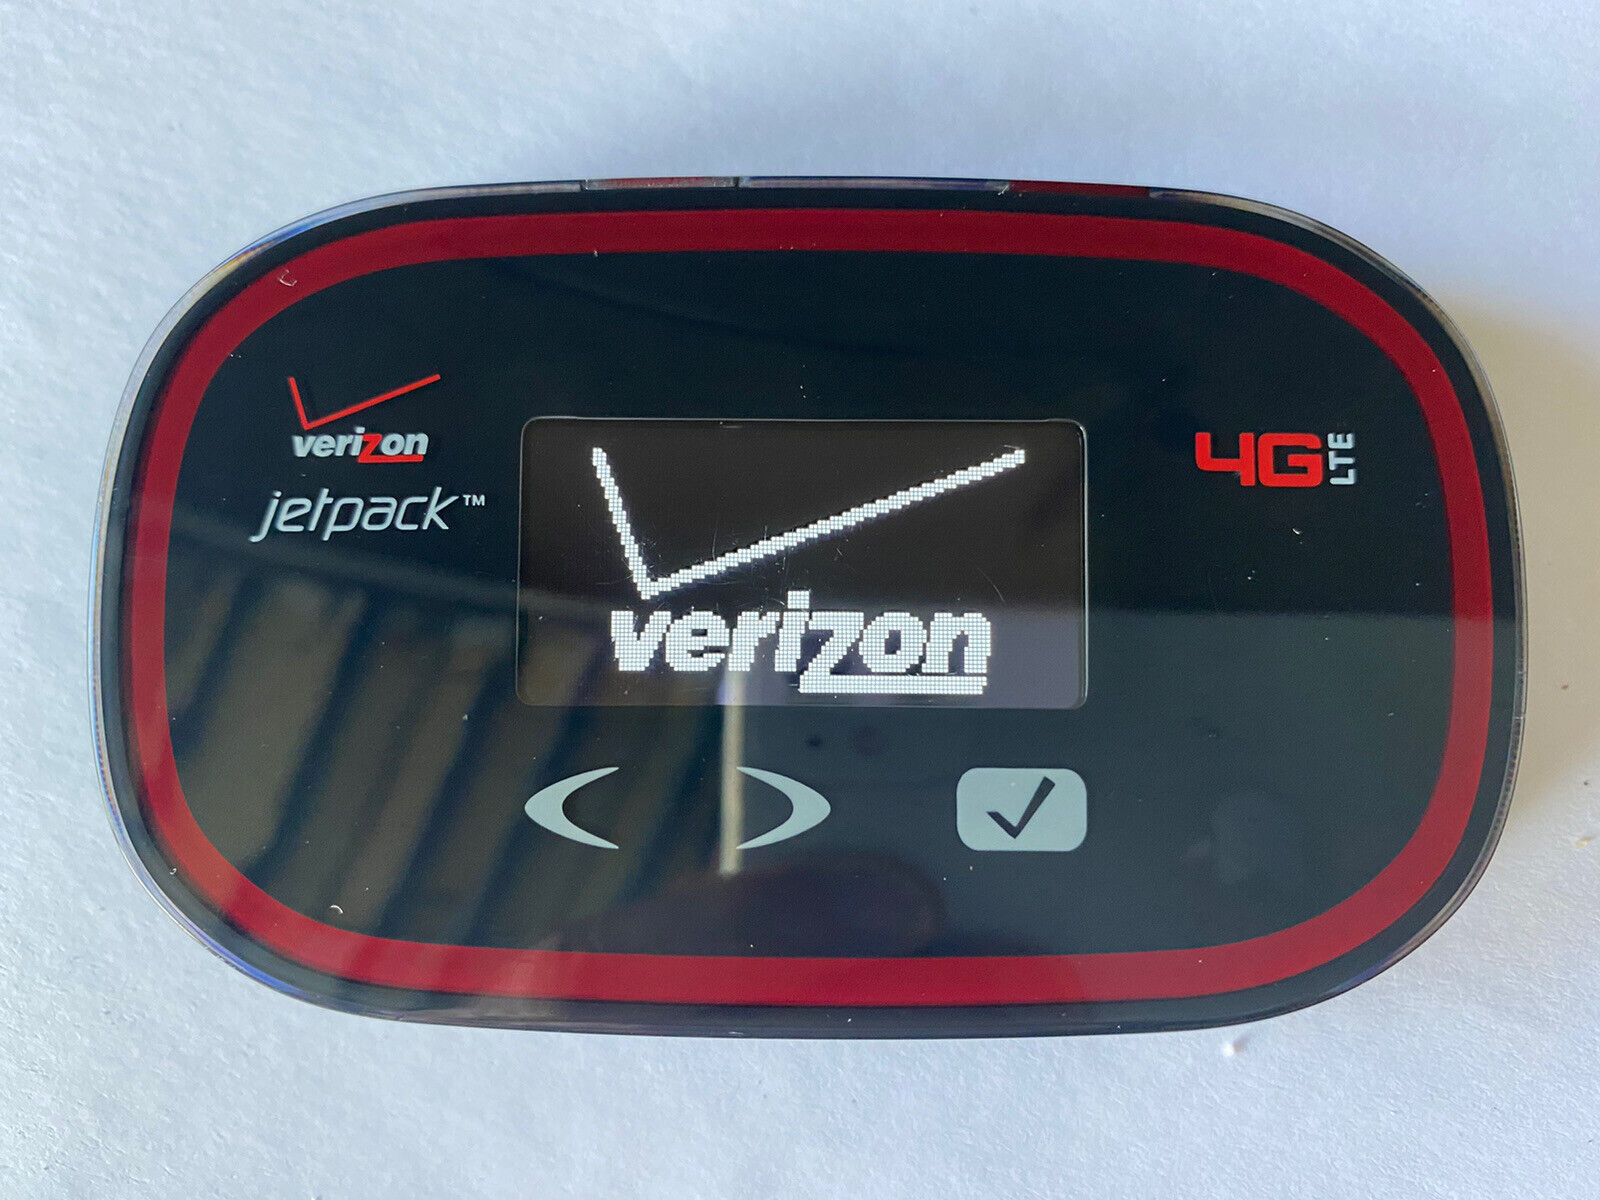 Verizon Jetpack 4G LTE 5510L Mobile Hotspot